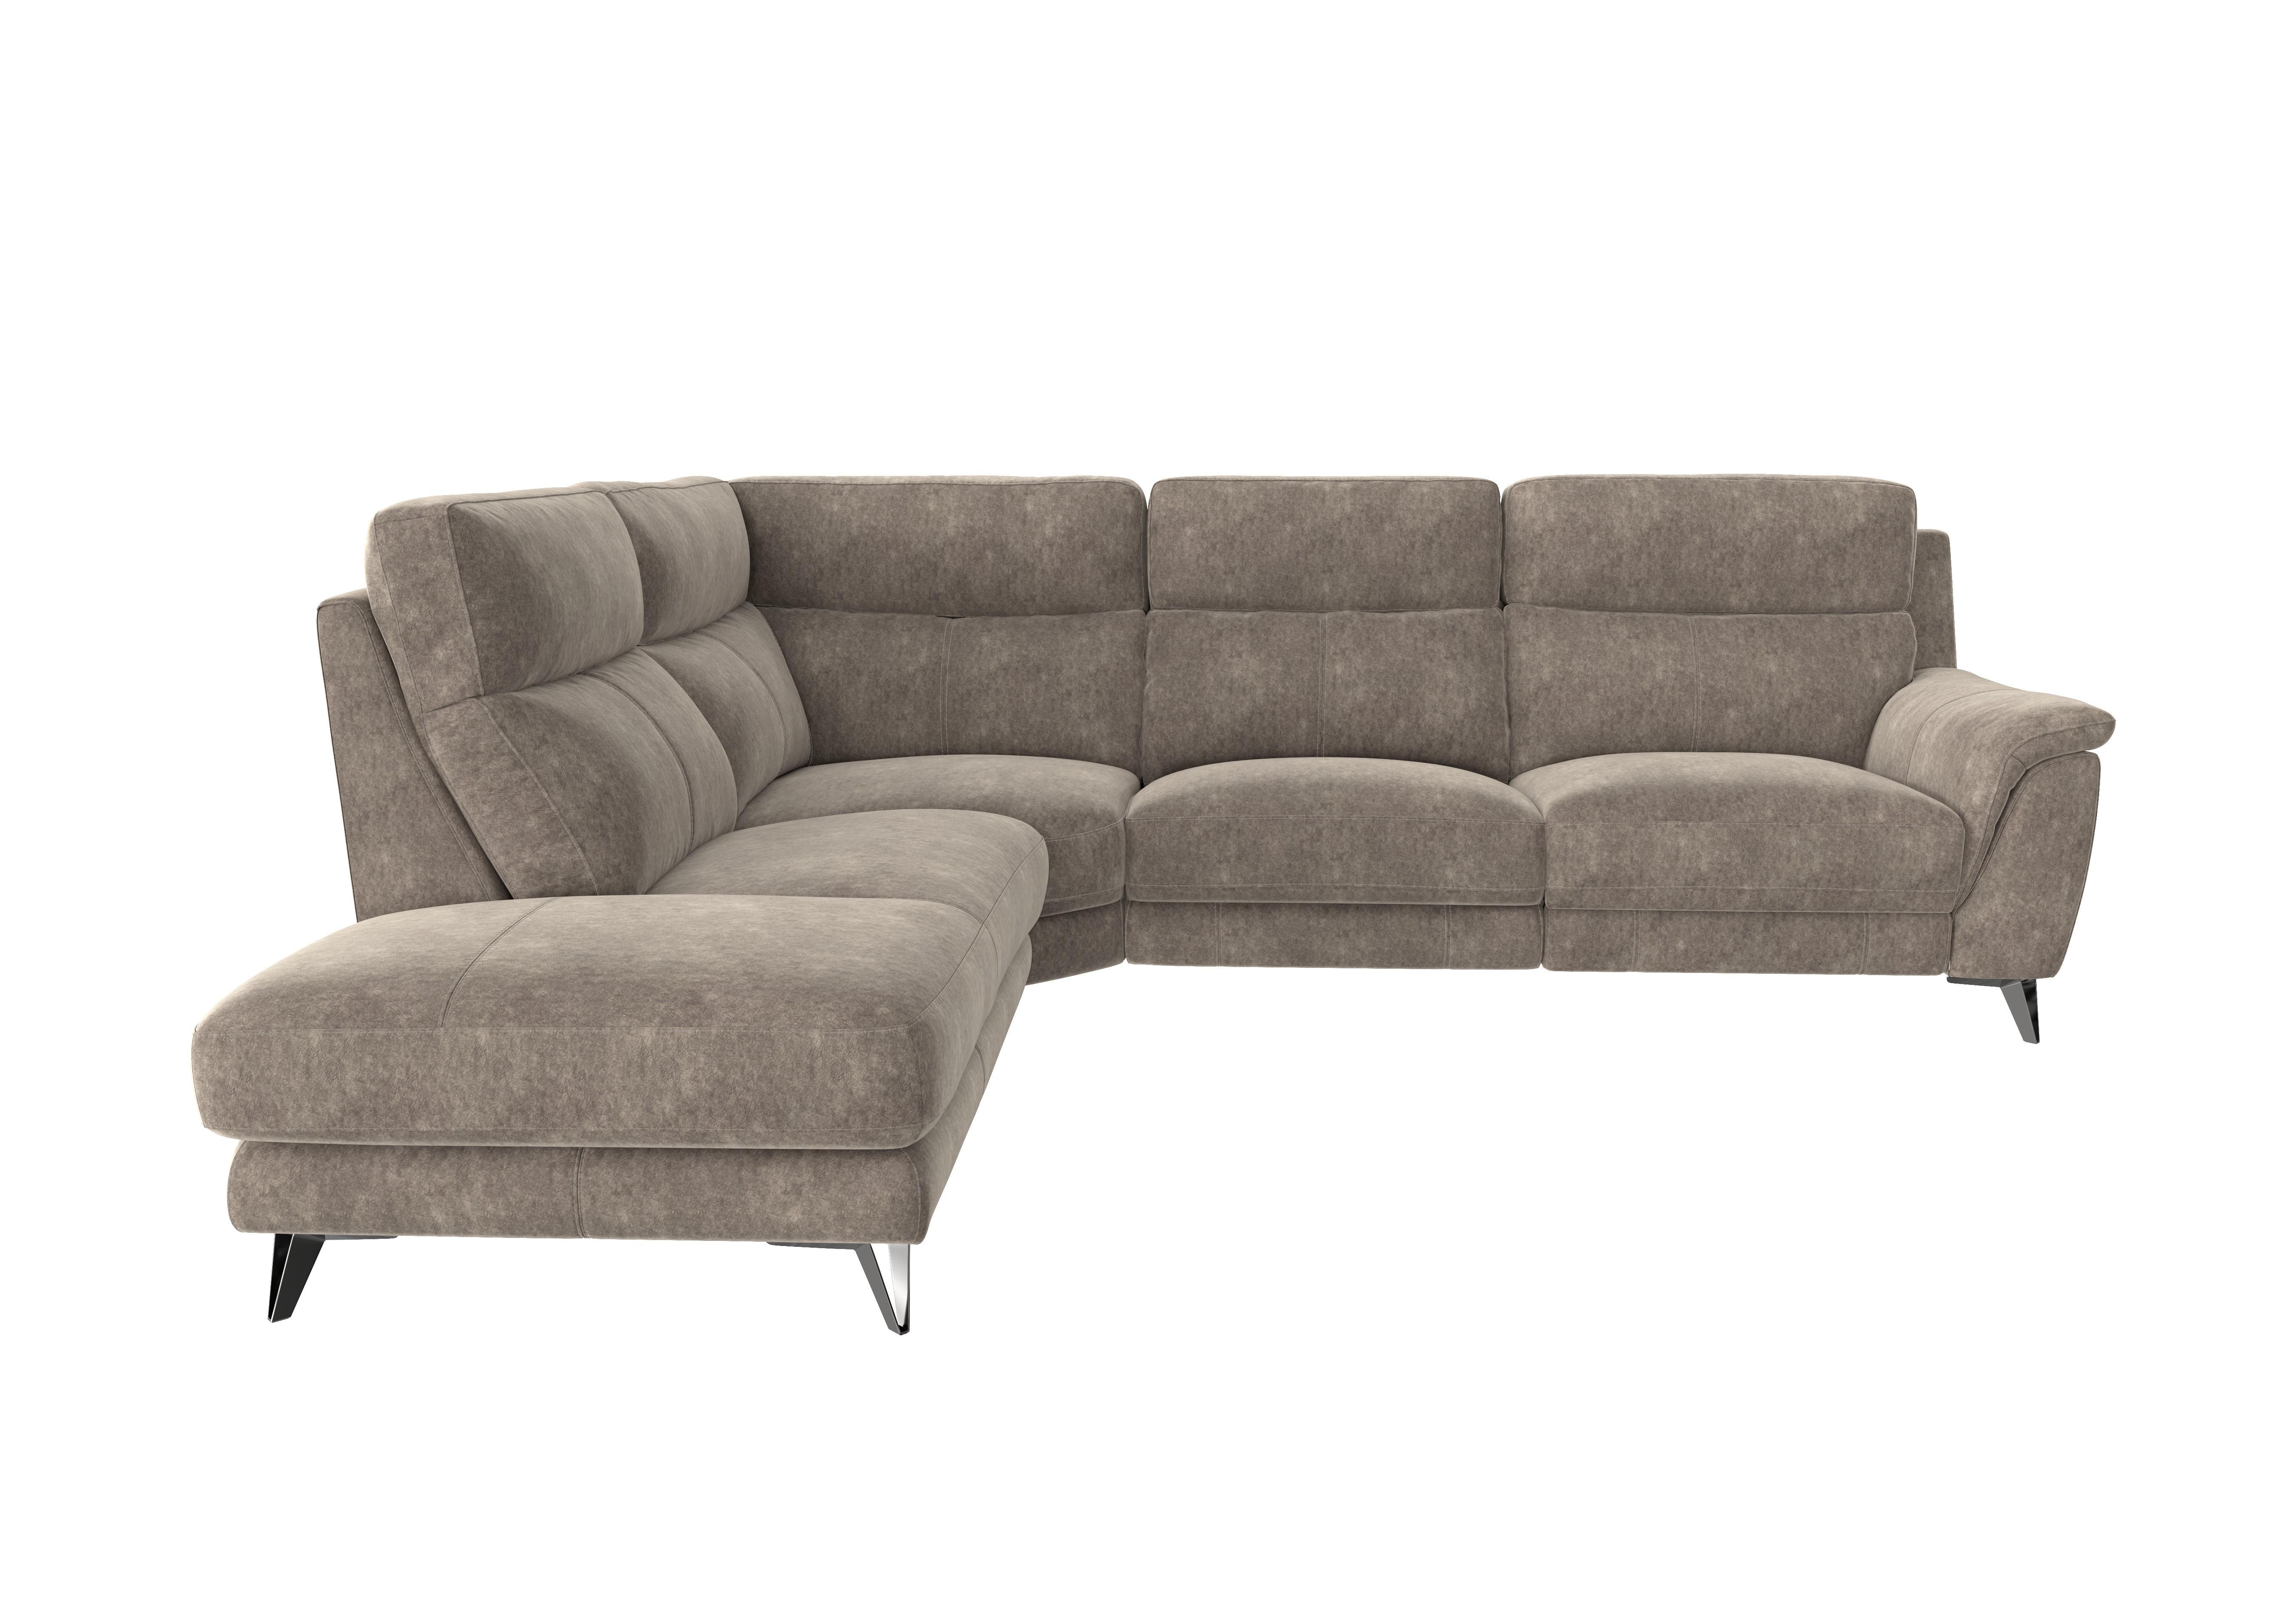 Contempo 3 Seater Chaise End Fabric Sofa in Bfa-Bnn-R29 Fv1 Mink on Furniture Village